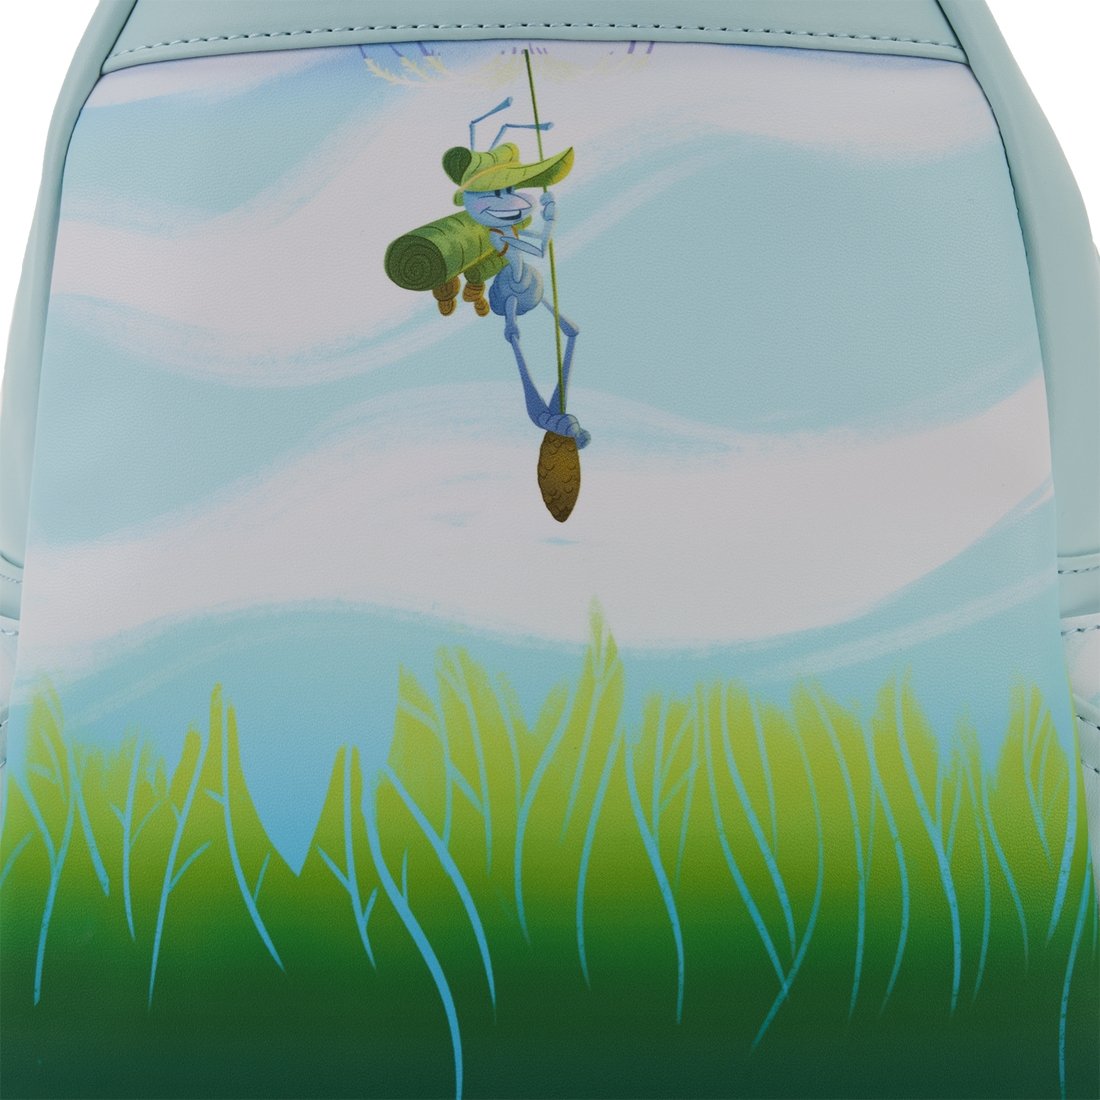 Disney Pixar A Bugs Life Earth Day Mini Backpack - Rockamilly-Bags & Purses-Vintage